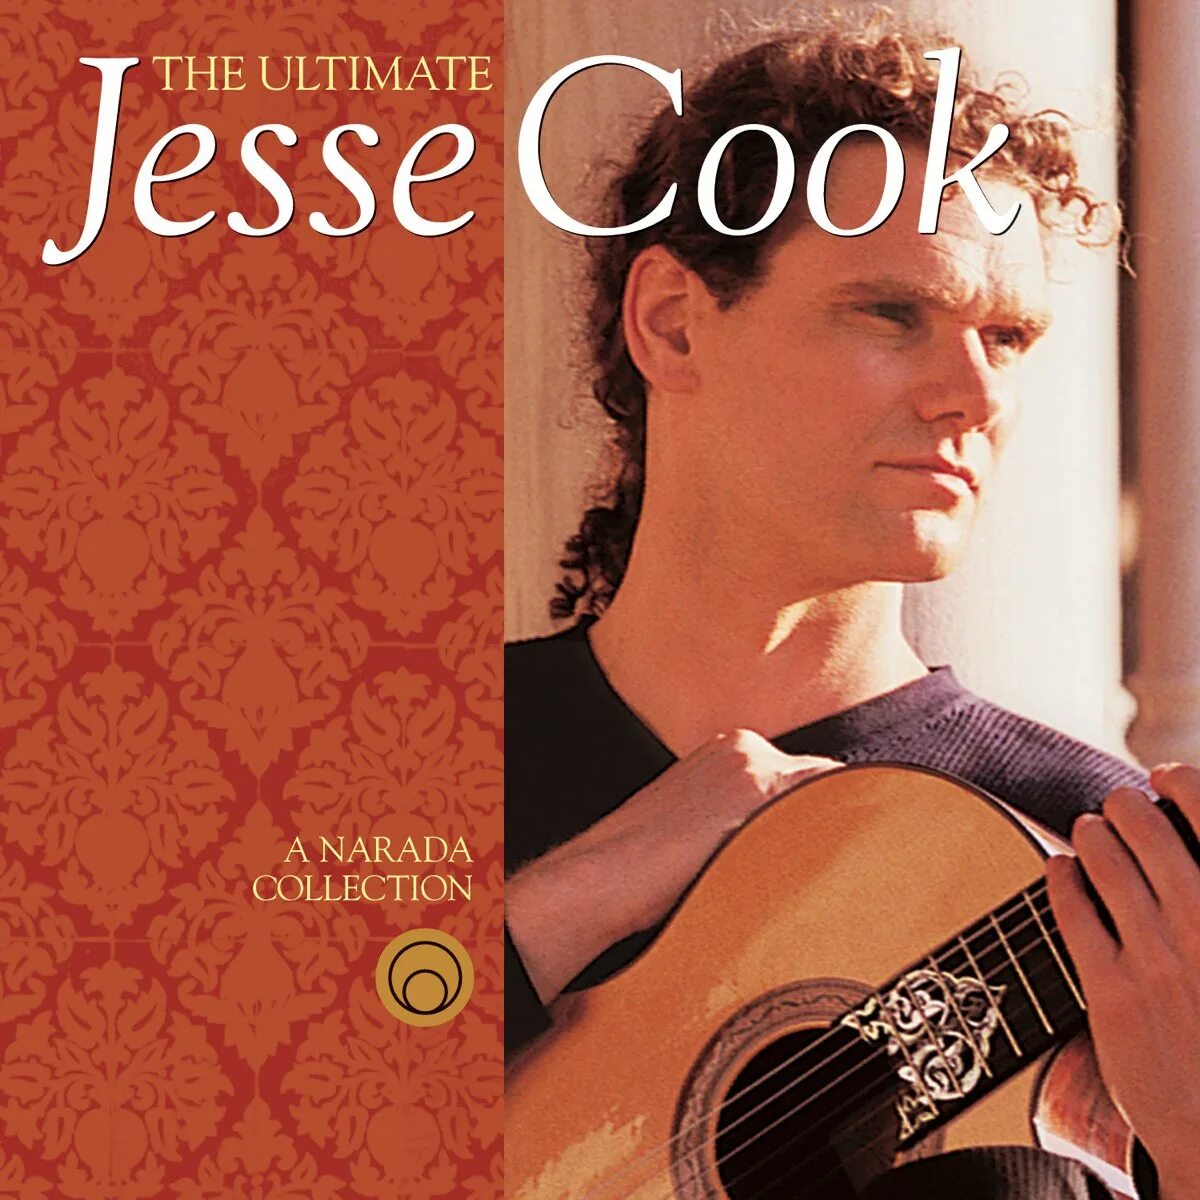 Jesse cook. Tempest Jesse Cook. Jesse обложка. Jesse Cook Gravity. Jesse Cook guitarist.